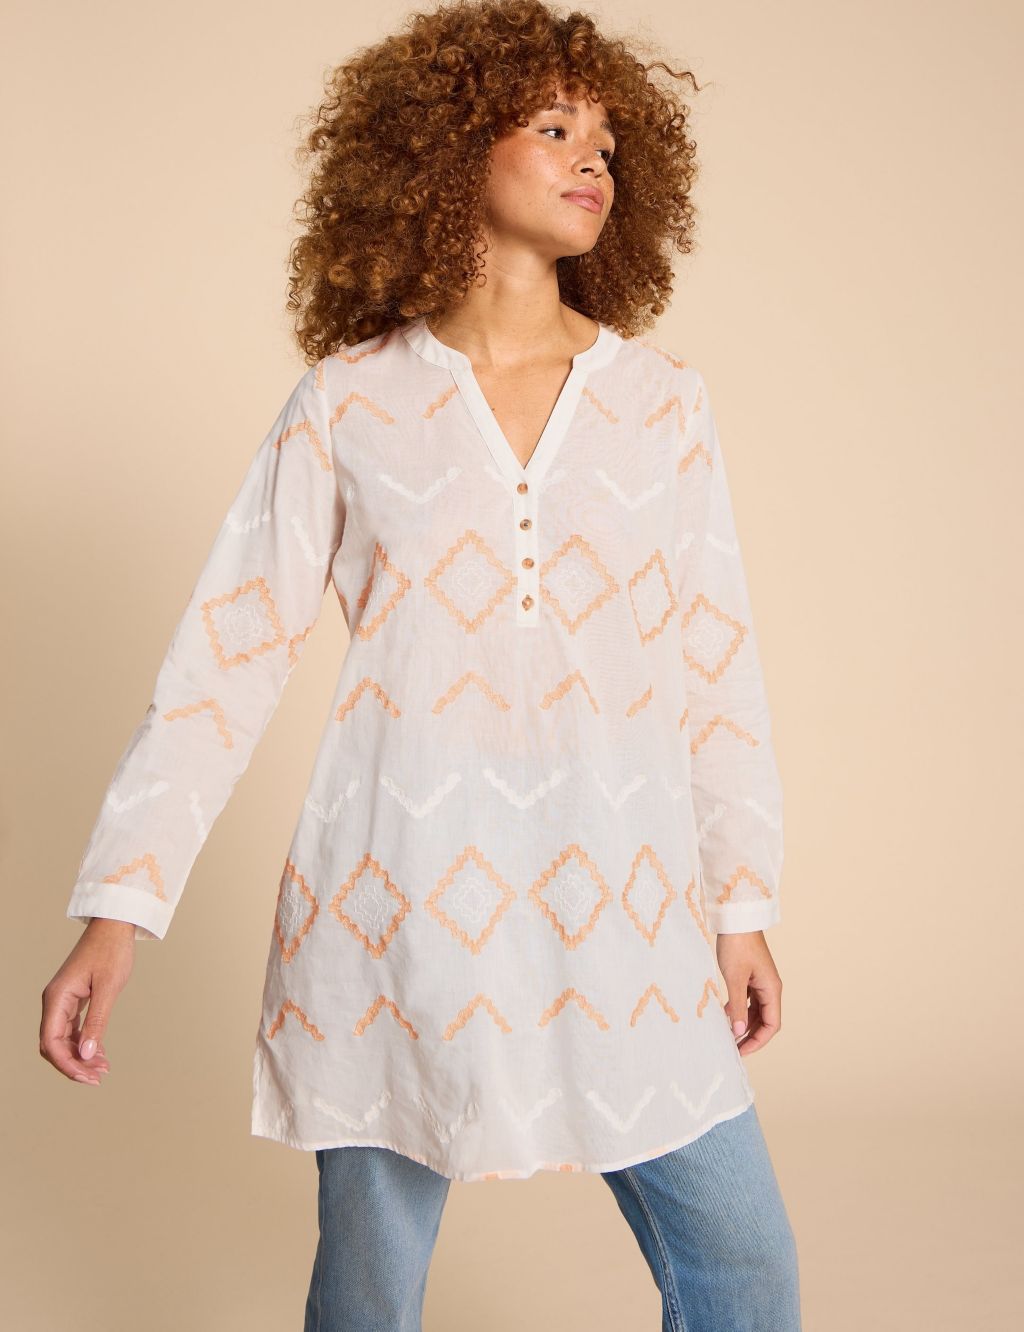  Tunic Tops Cotton for Women Loose Fit Women Sweatshirt